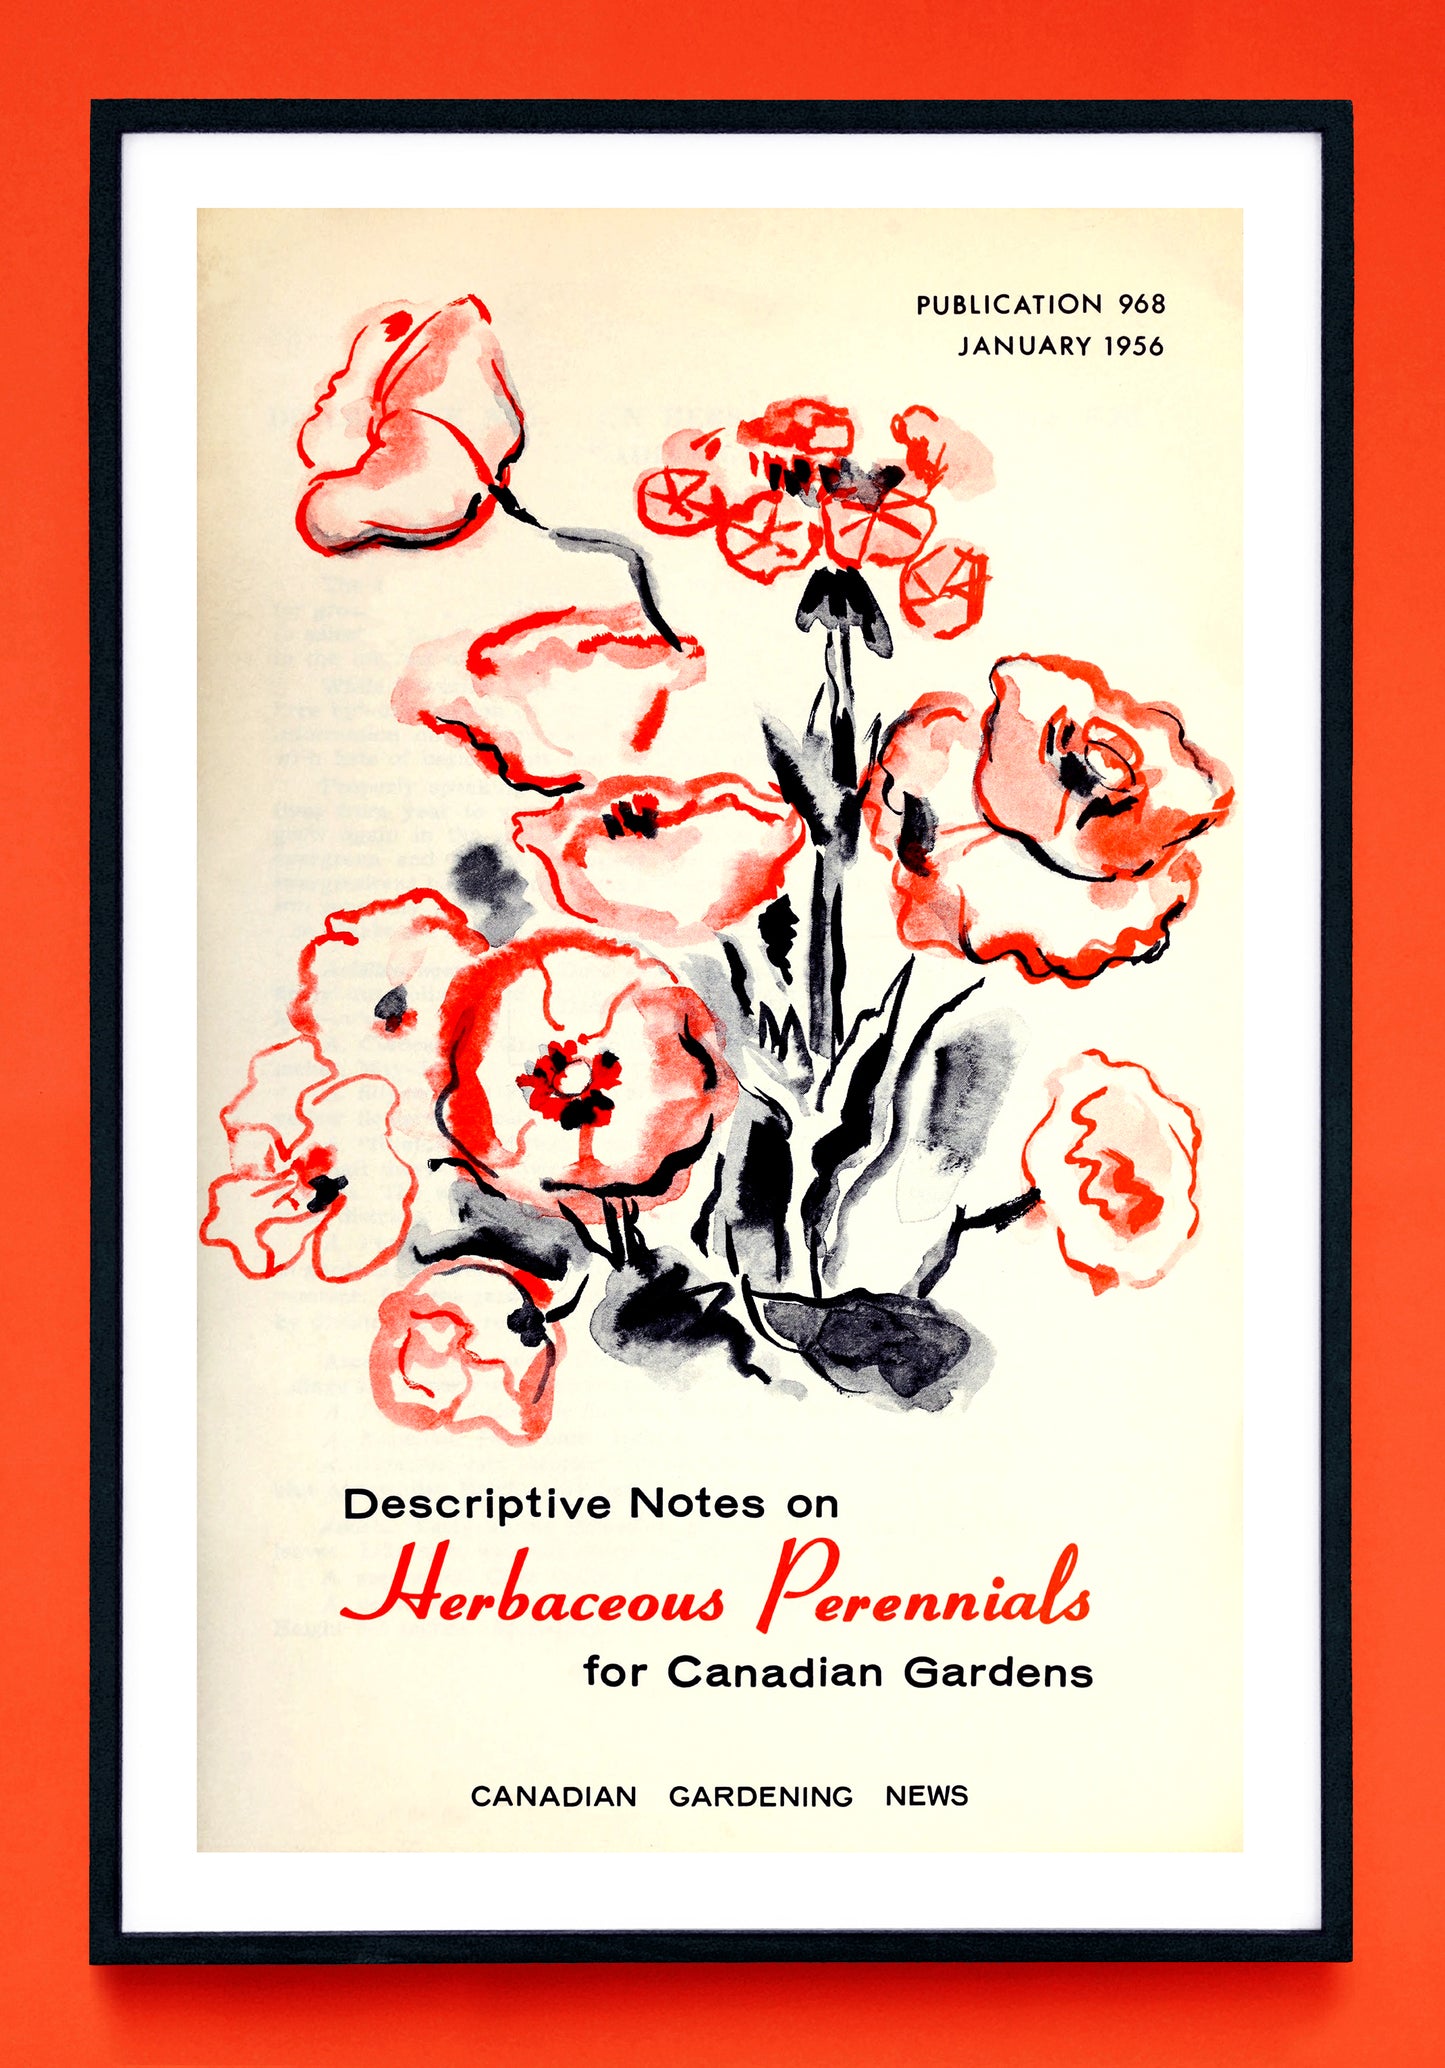 "Descriptive Notes on Herbaceous Perennials for Canadian Gardens" print (1956)